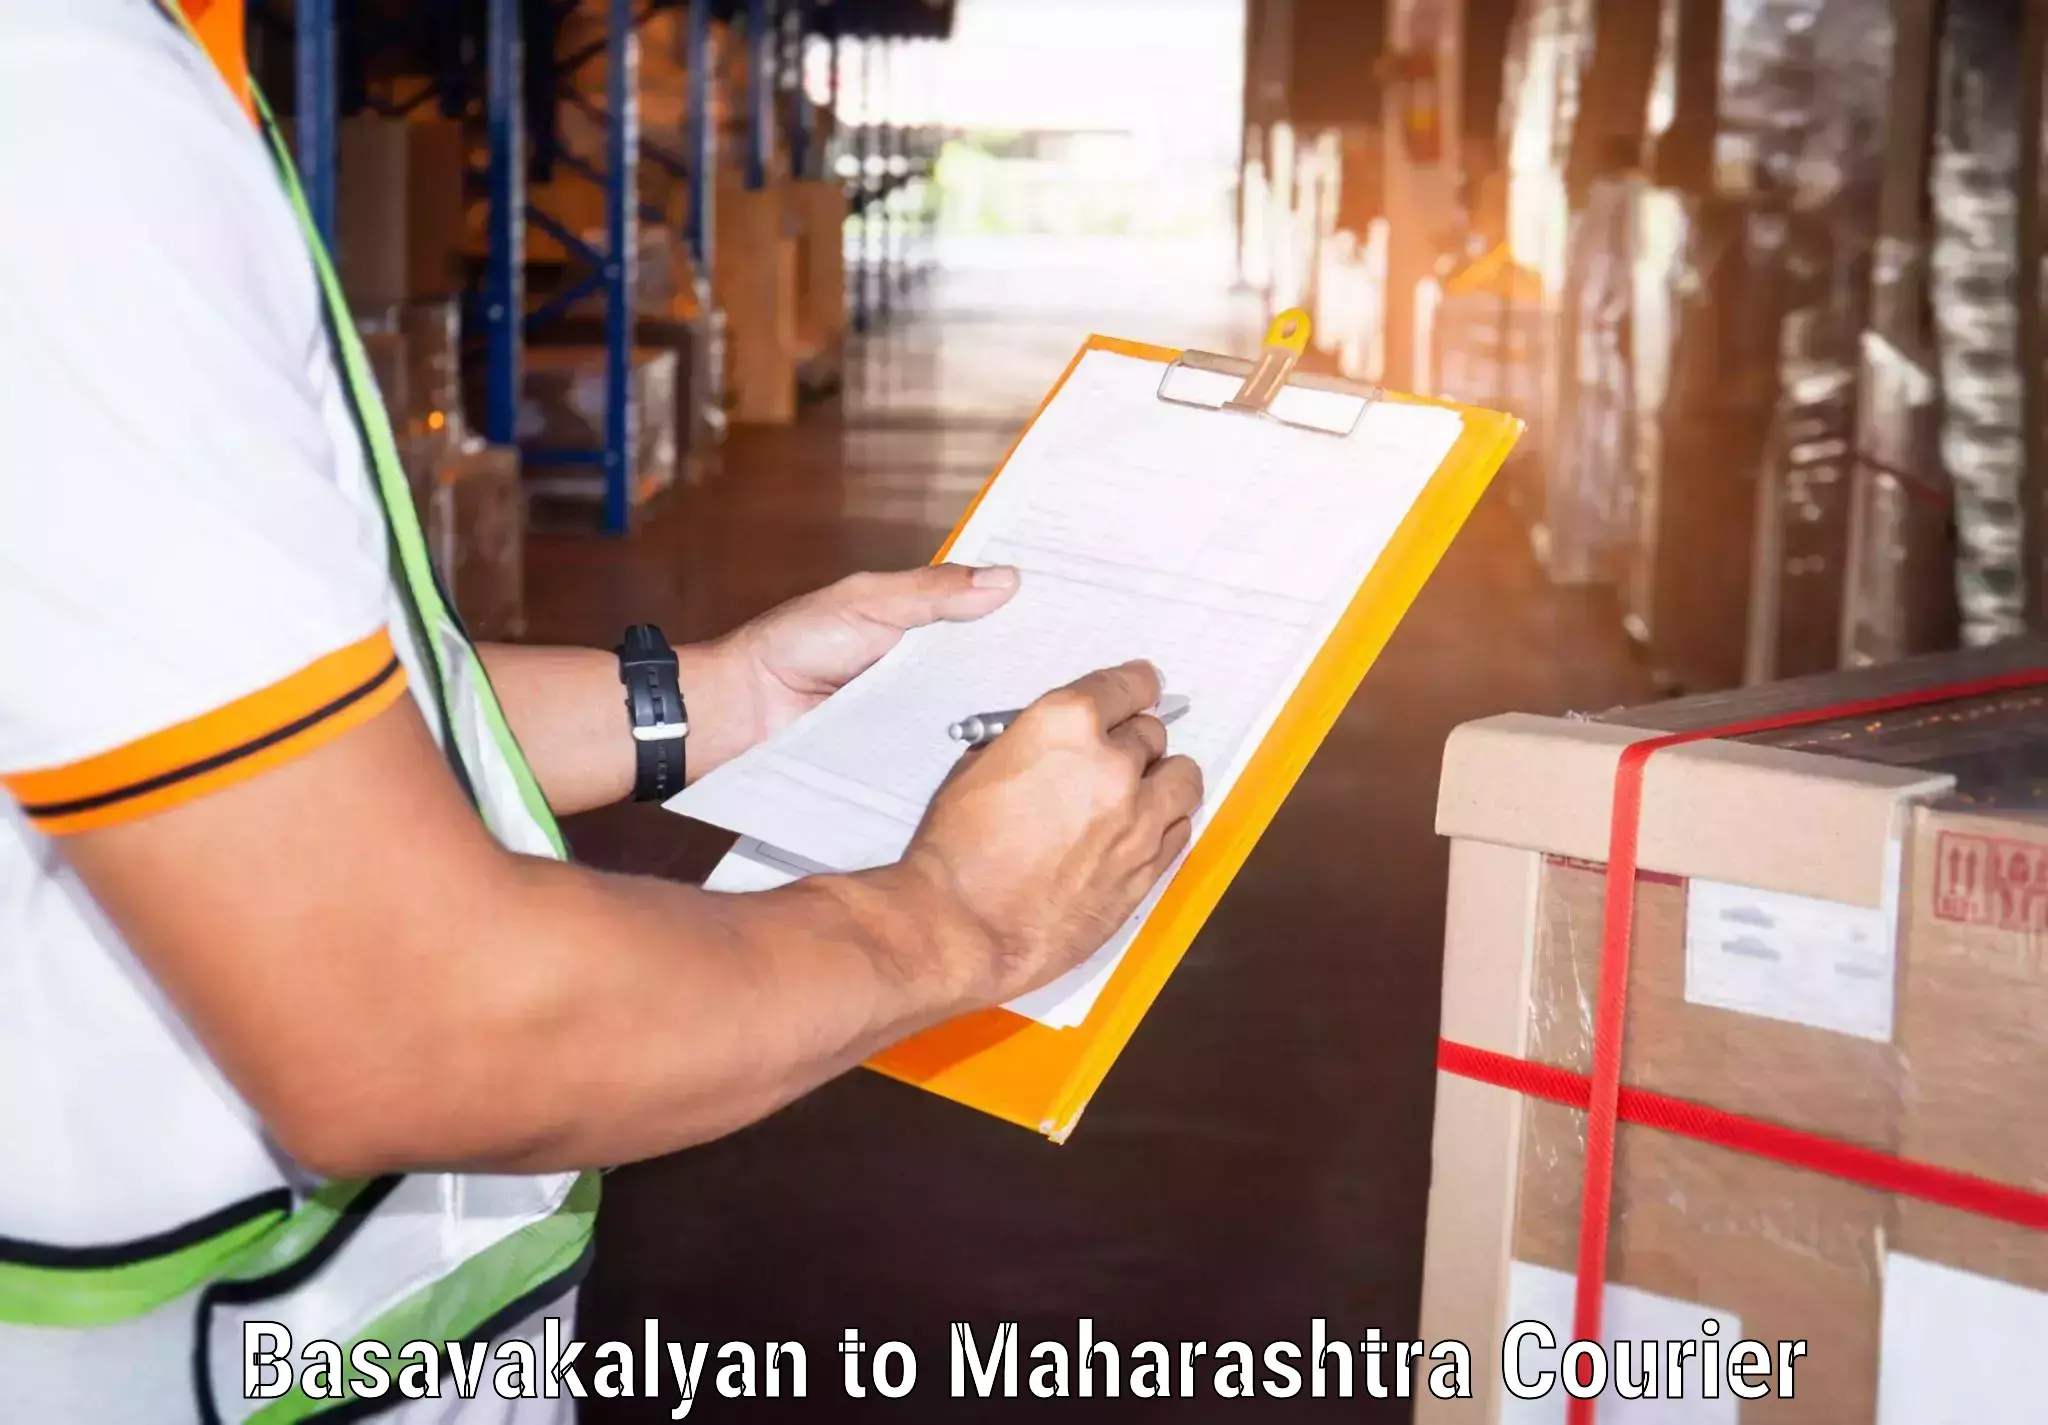 Global courier networks Basavakalyan to Ballarpur